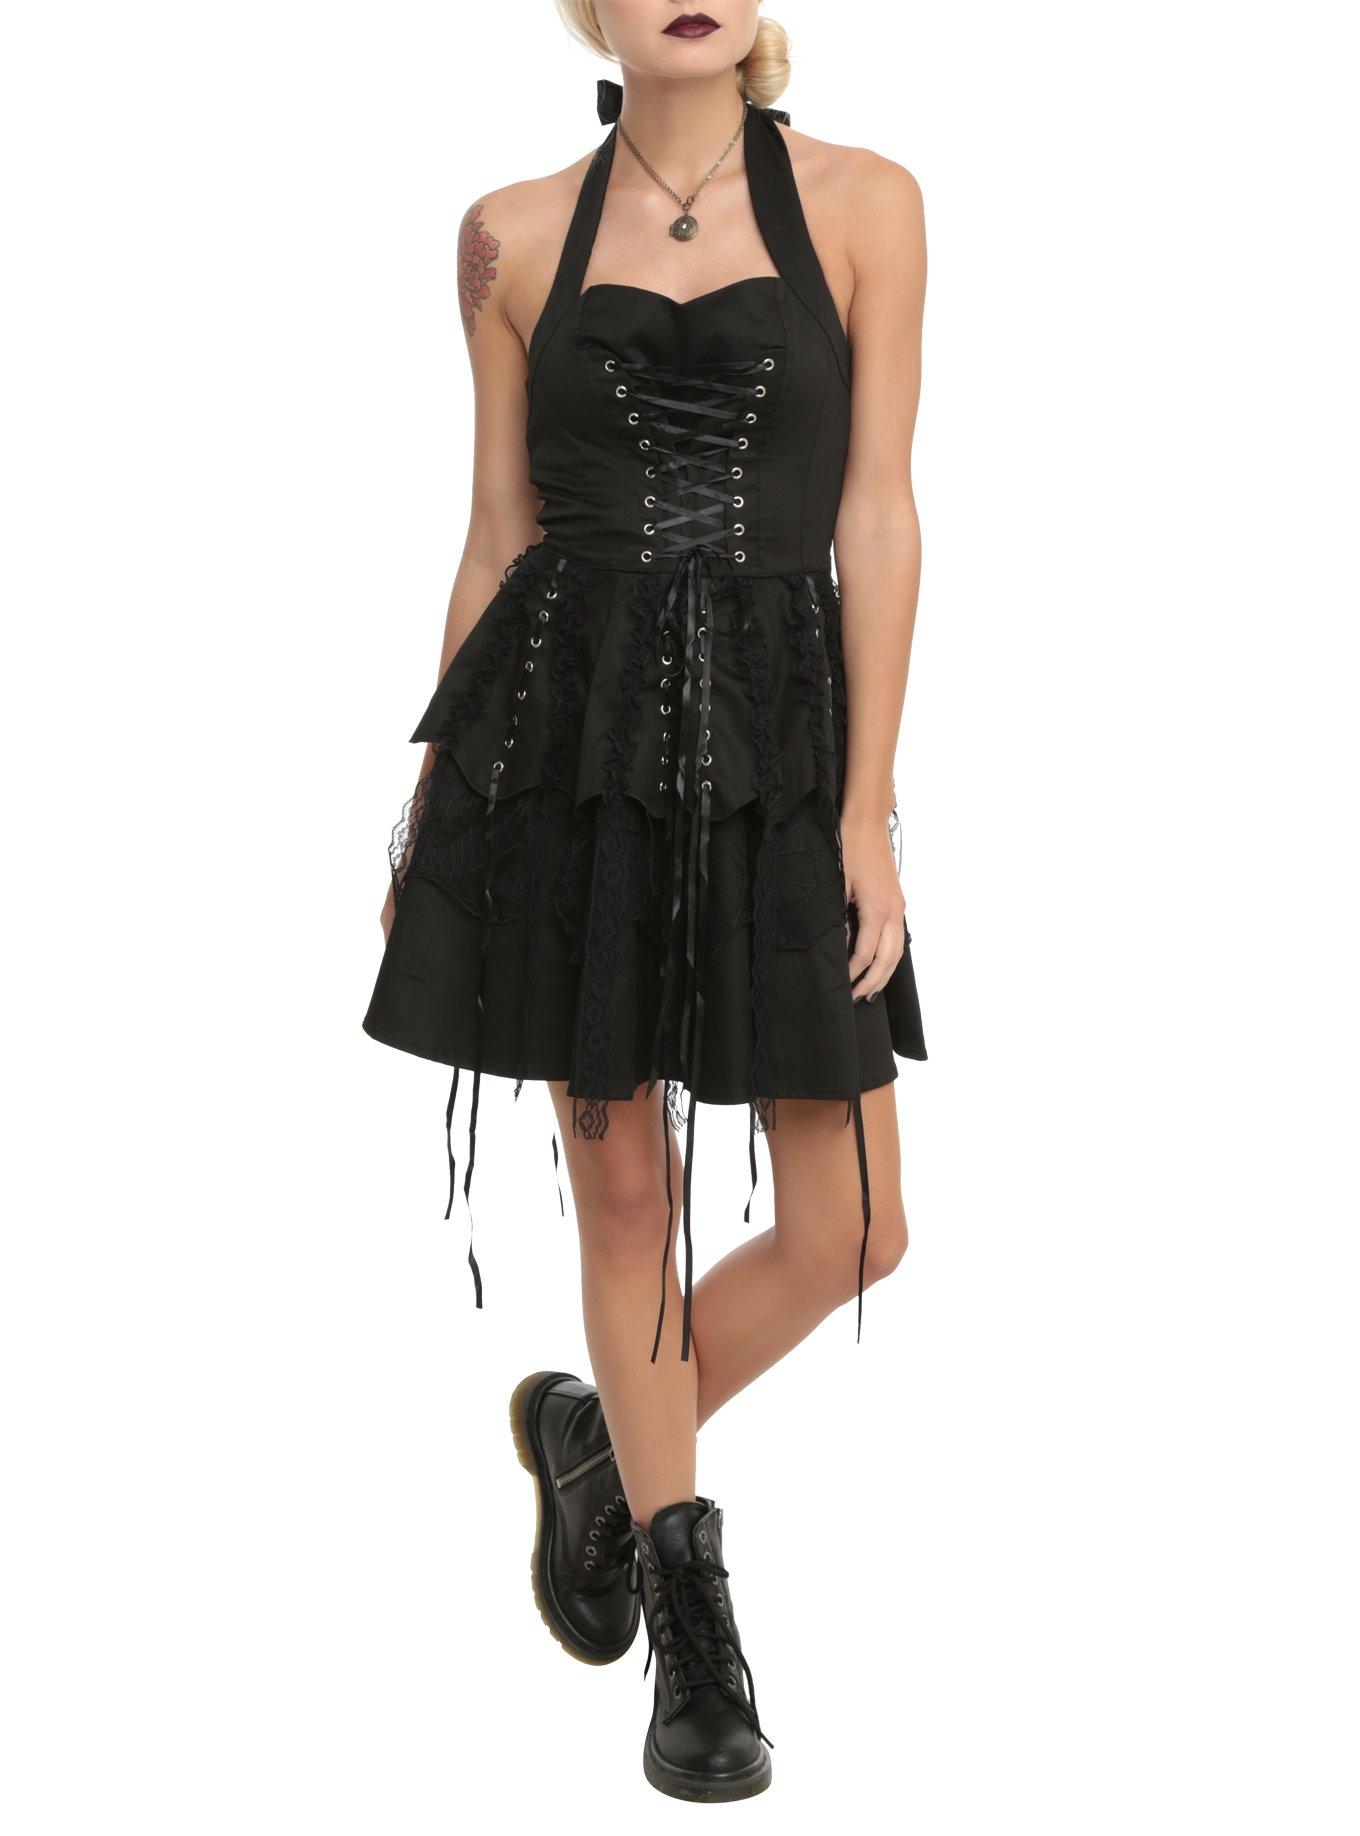 black frilly dress